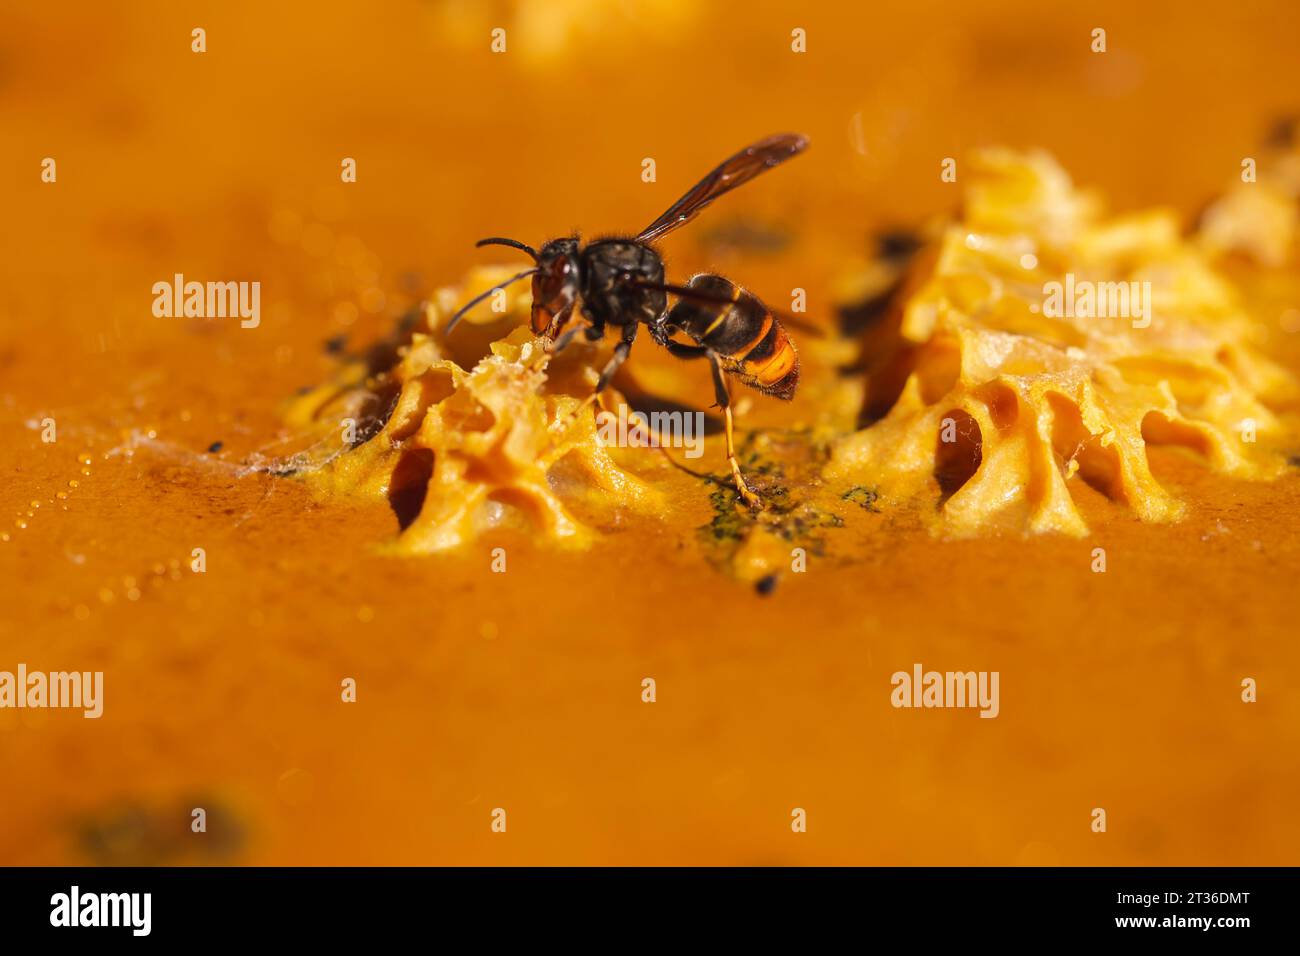 Asian Hornet insect eating honey Stock Photo